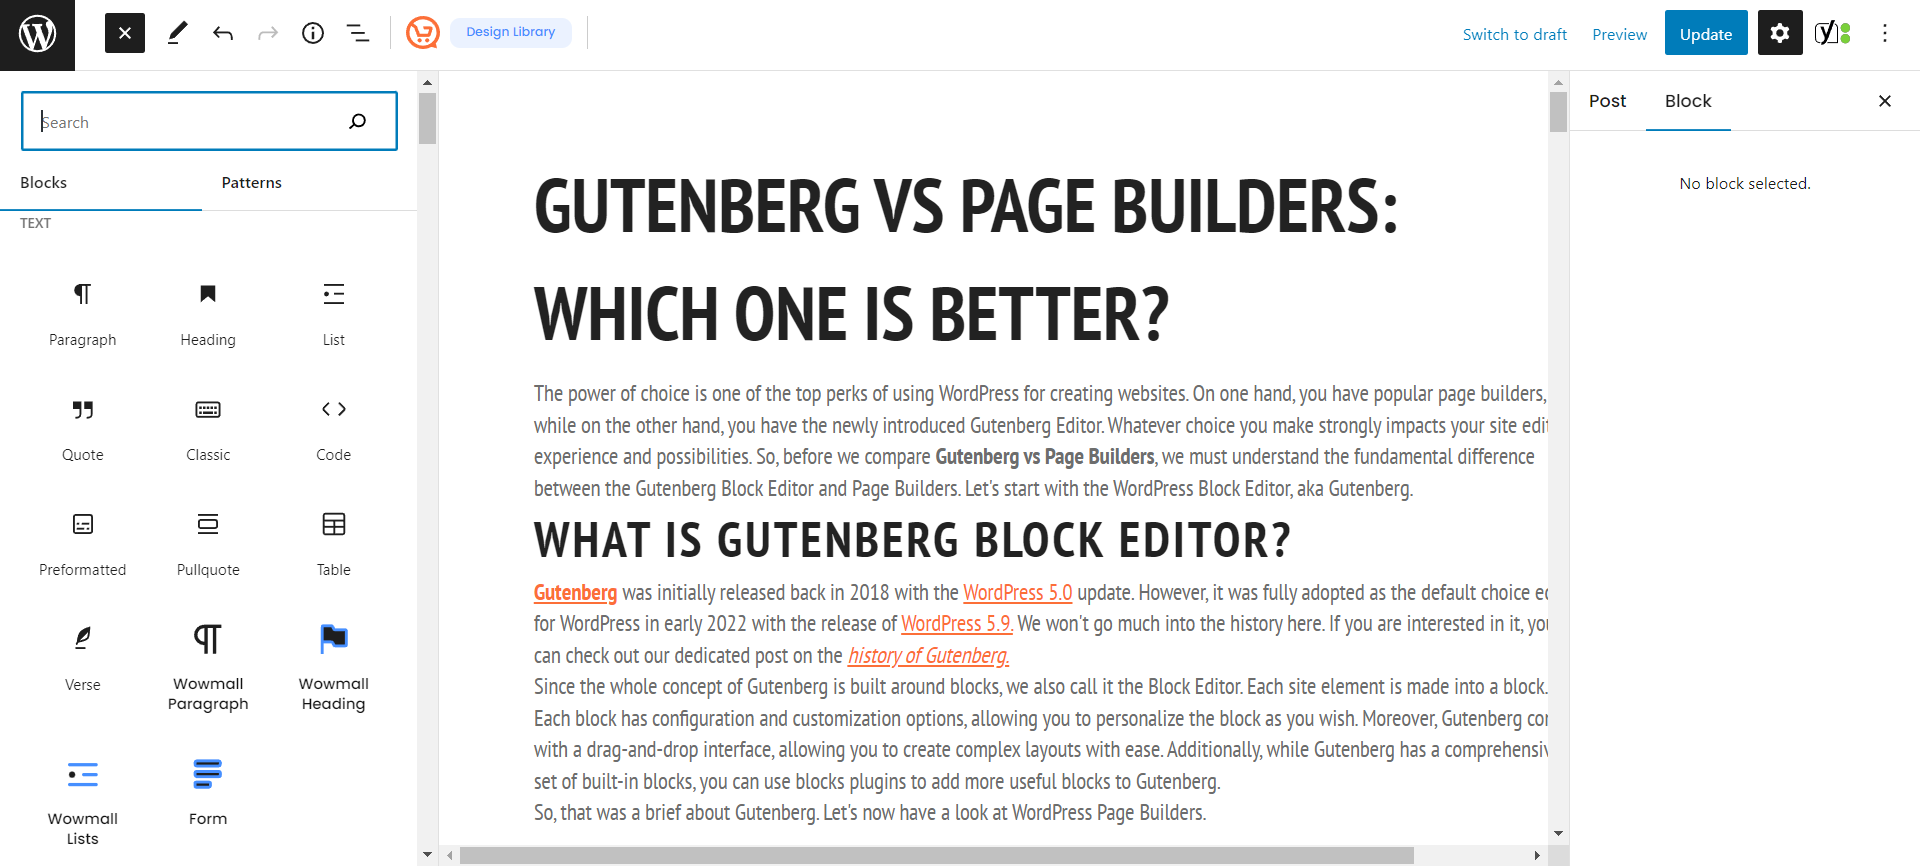 Gutenberg block editor